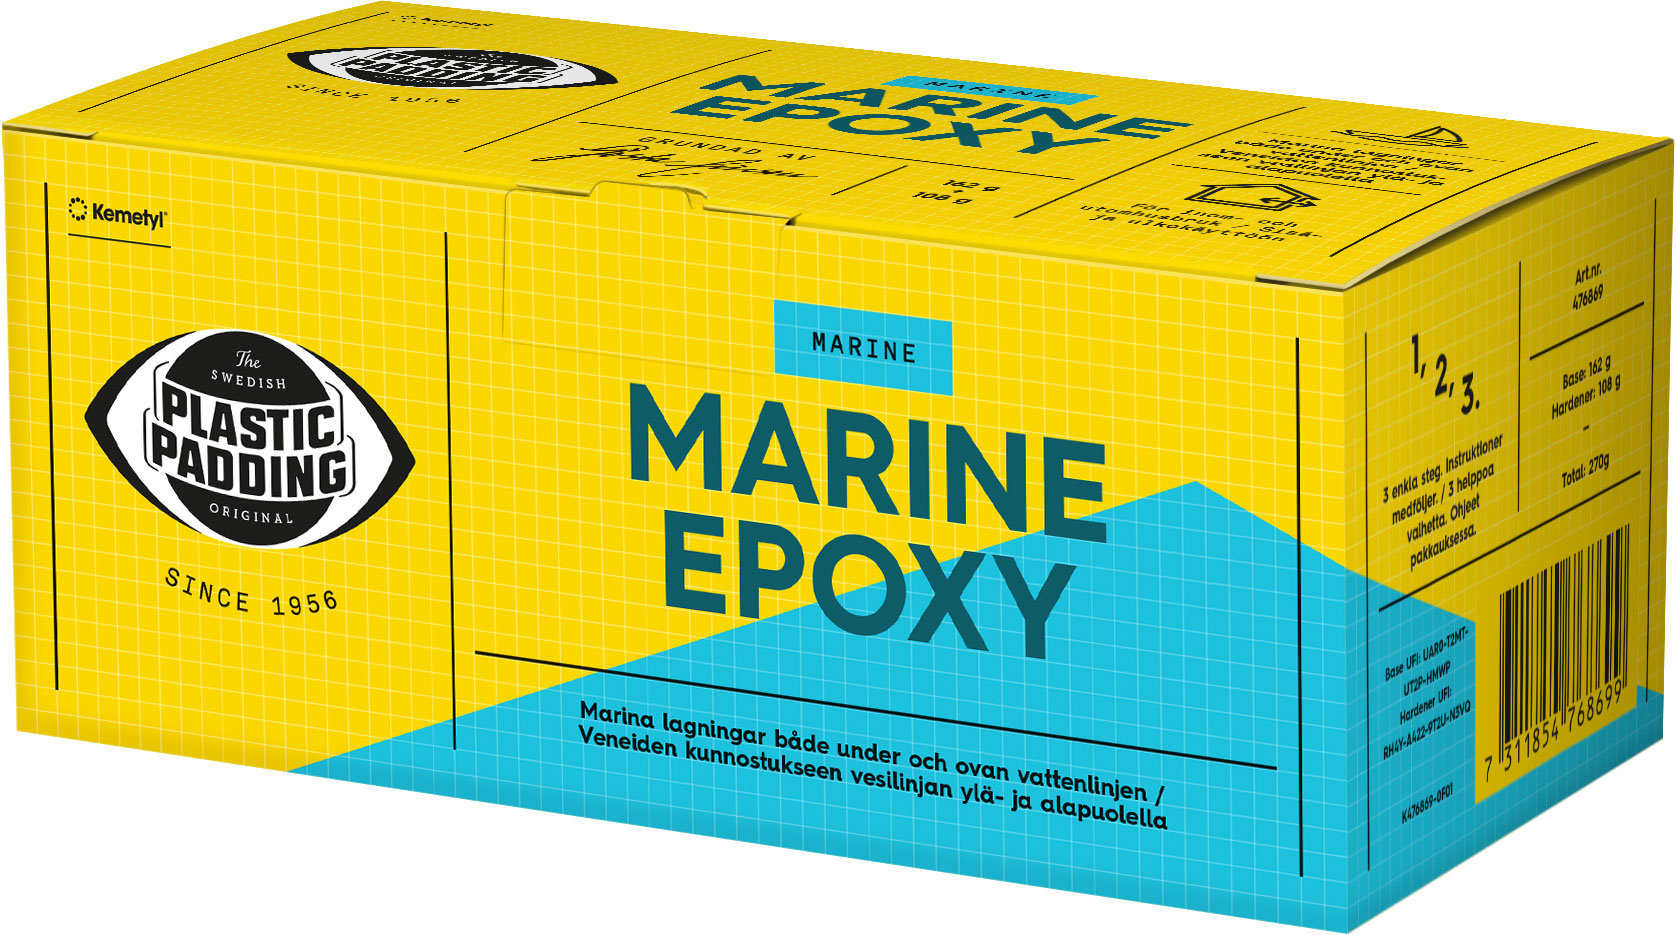 Marine epoxy 270 g - Plastic Padding